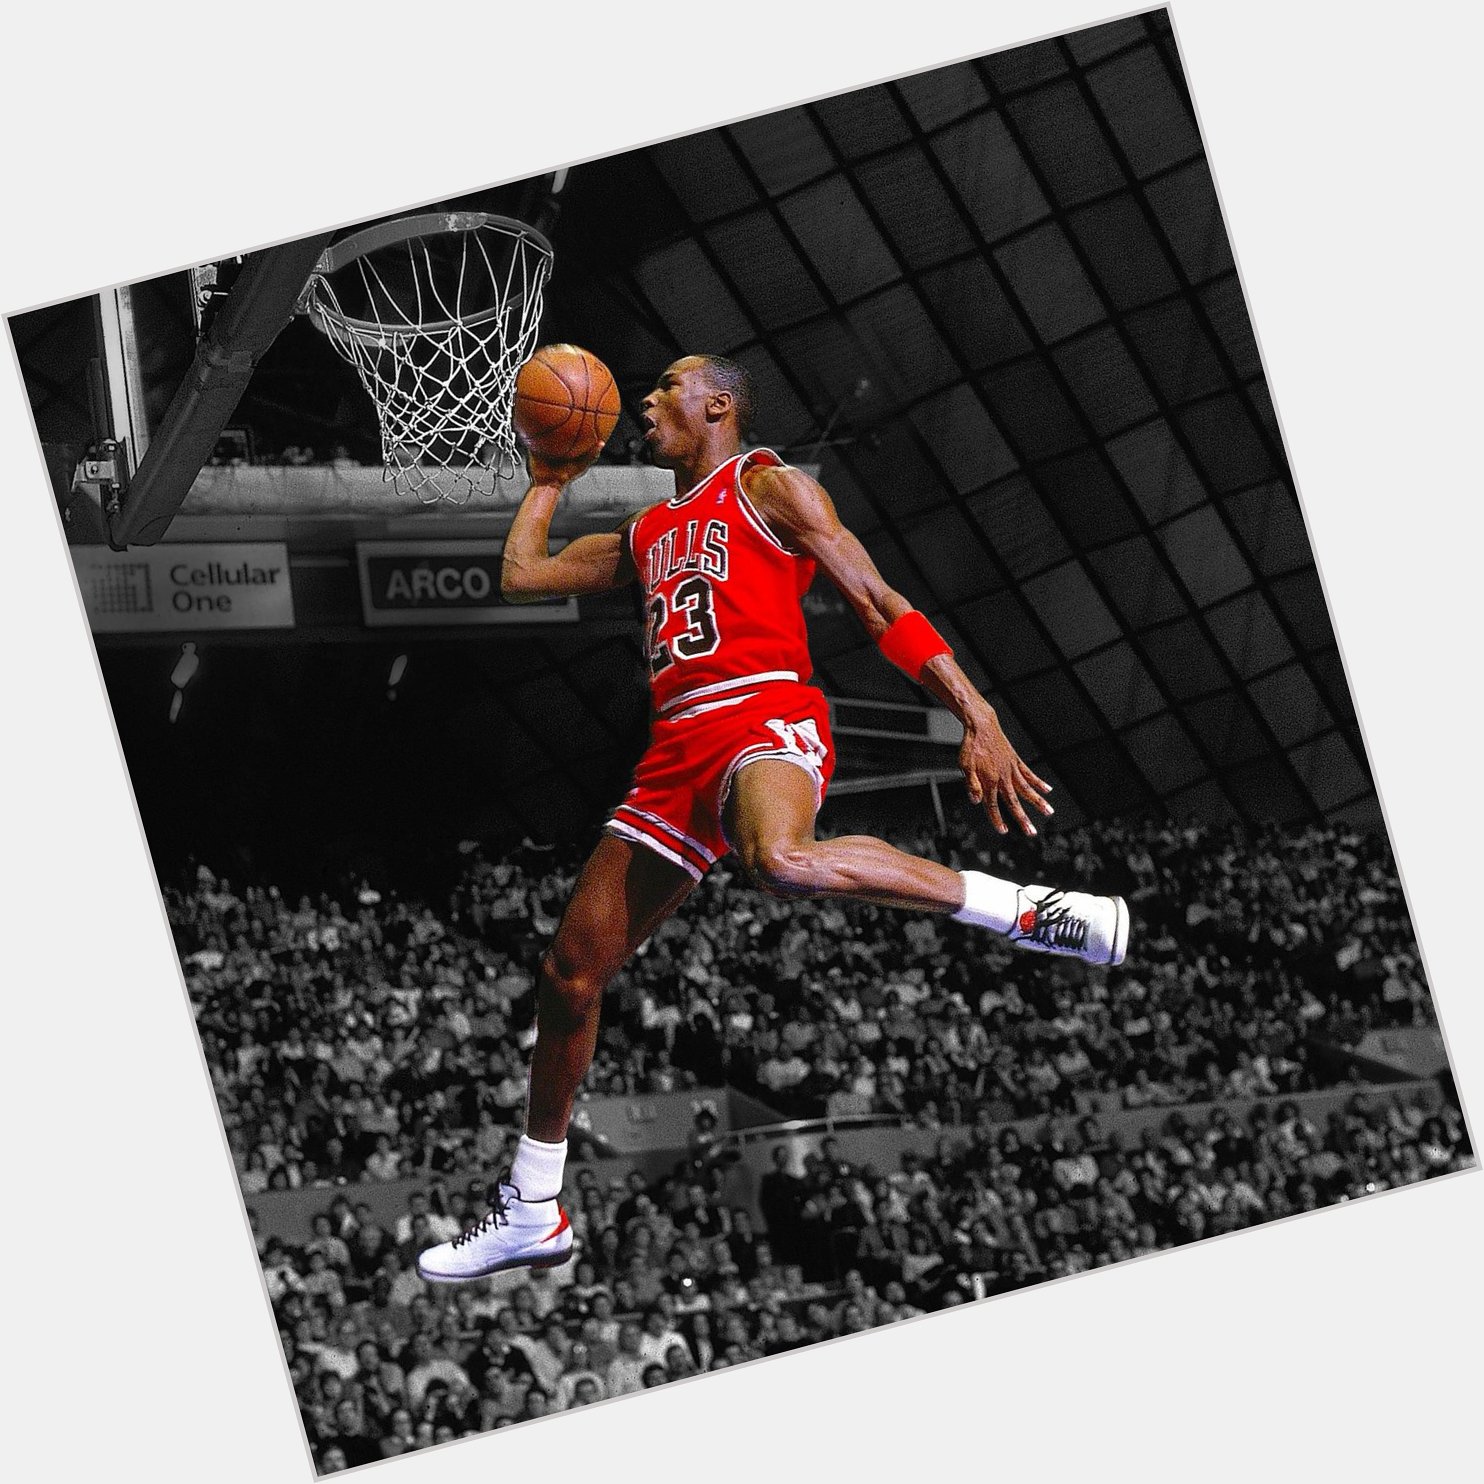 Happy birthday Michael Jordan The legend turns 58 years old today 